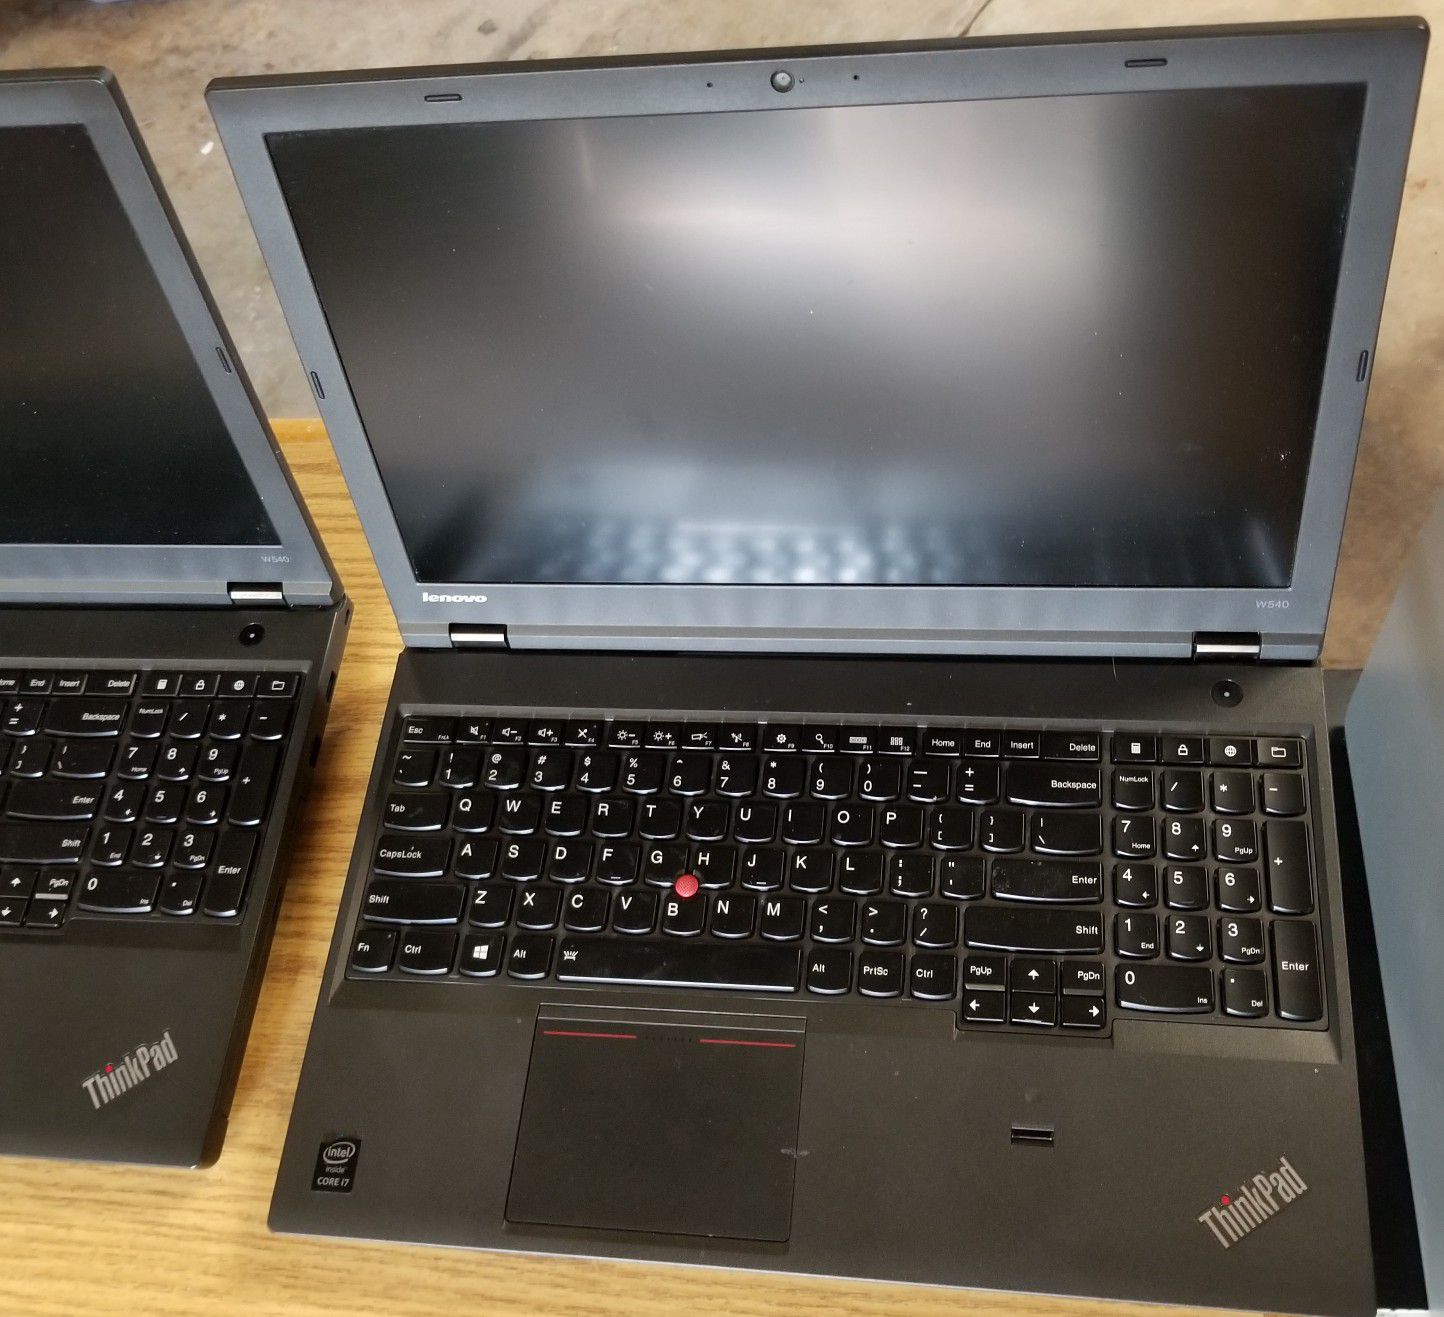 2 Lenovo w540 15.6" Laptops.